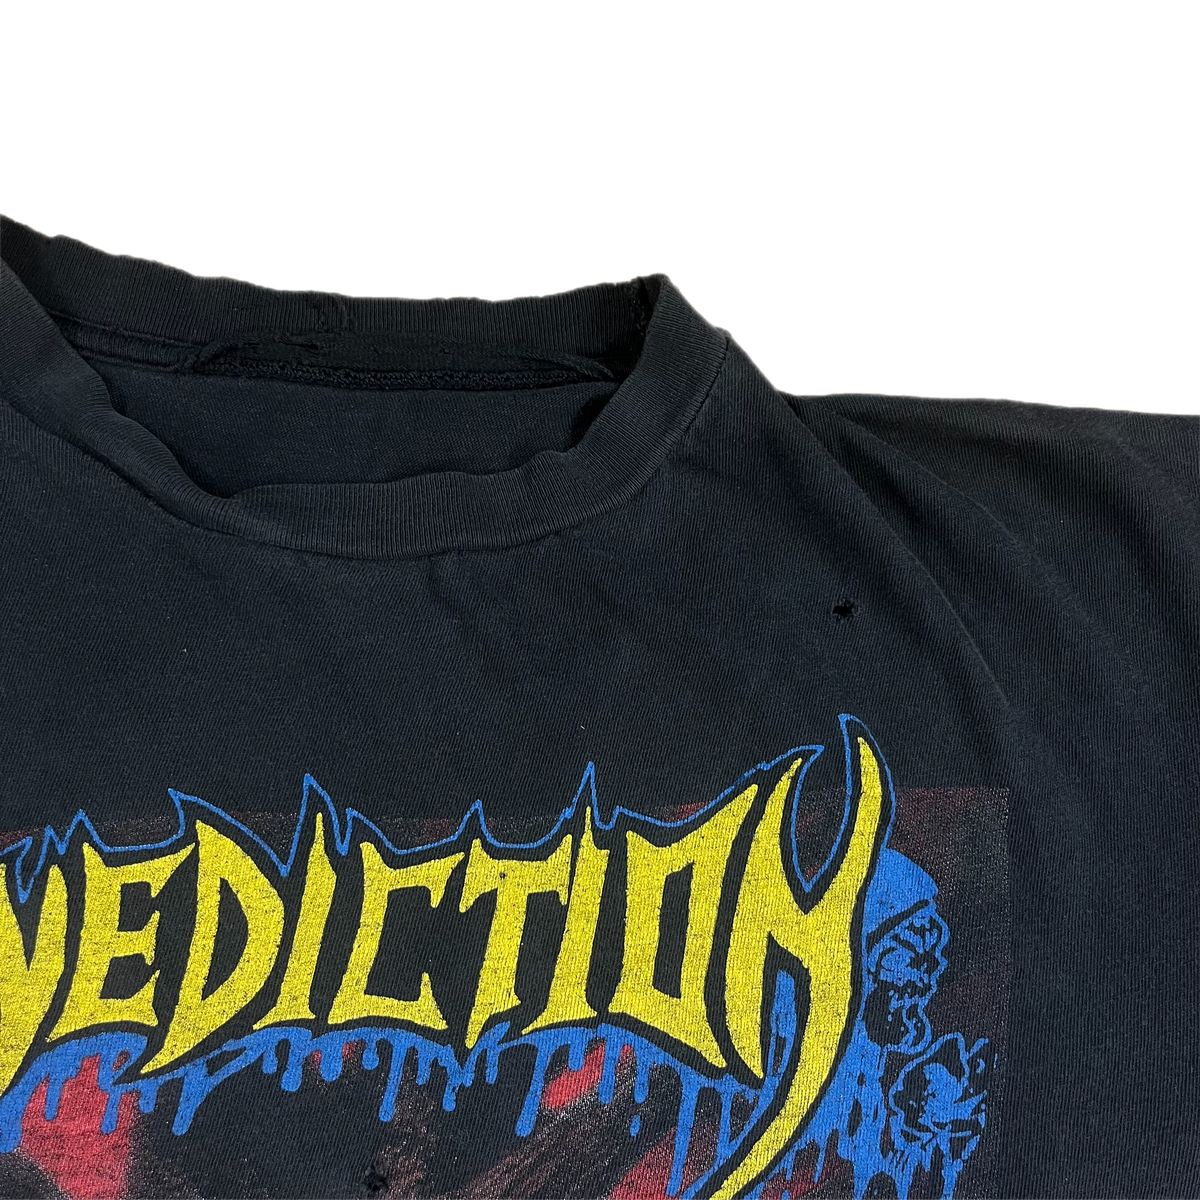 Vintage Benediction &quot;The Grand Leveller&quot; Nuclear Blast T-Shirt